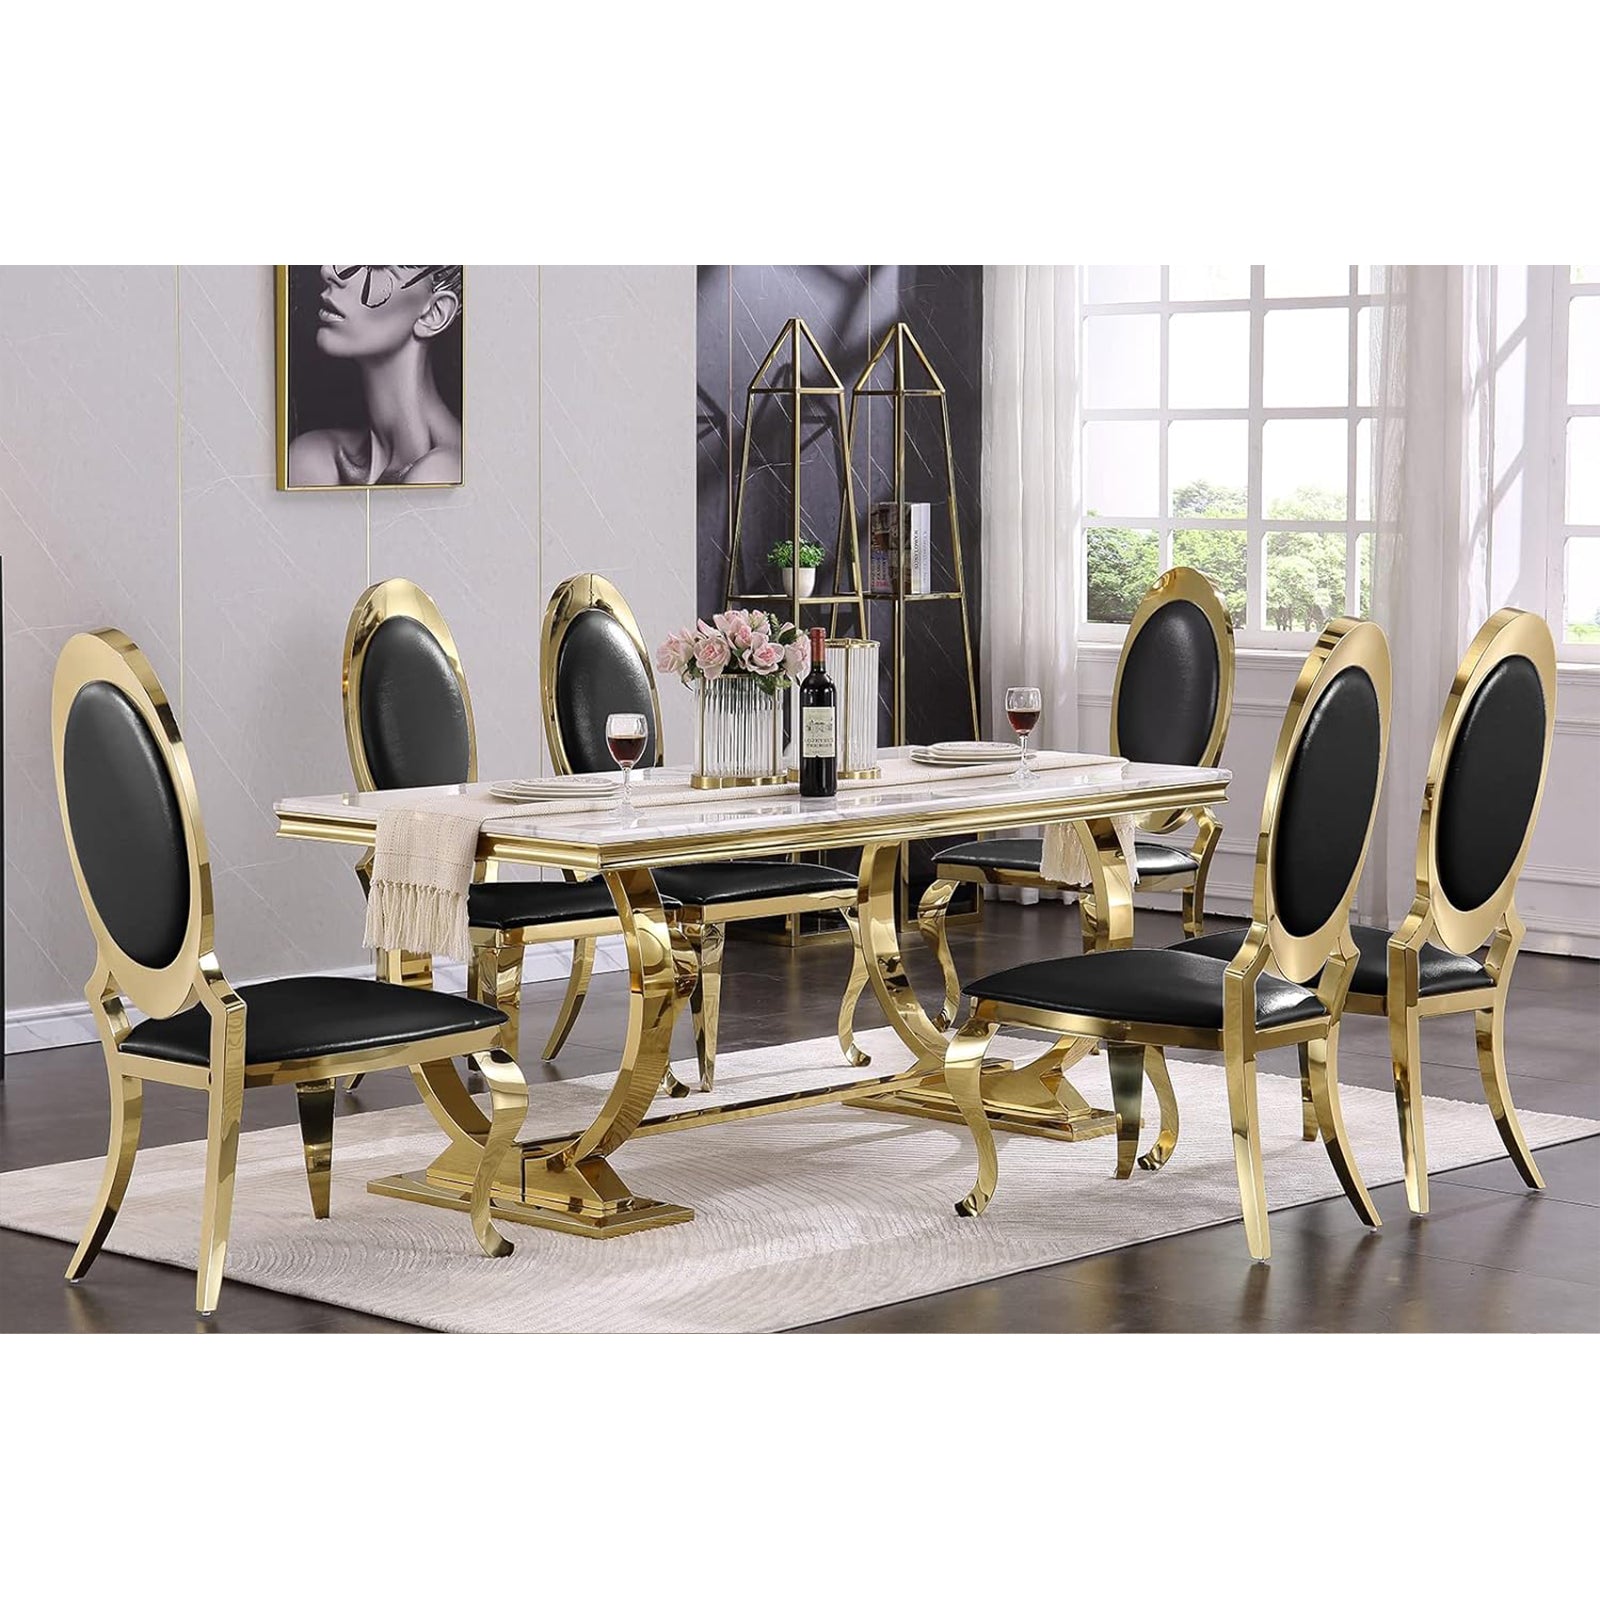 612-Set | AUZ Black and Gold Dining room Sets for 6